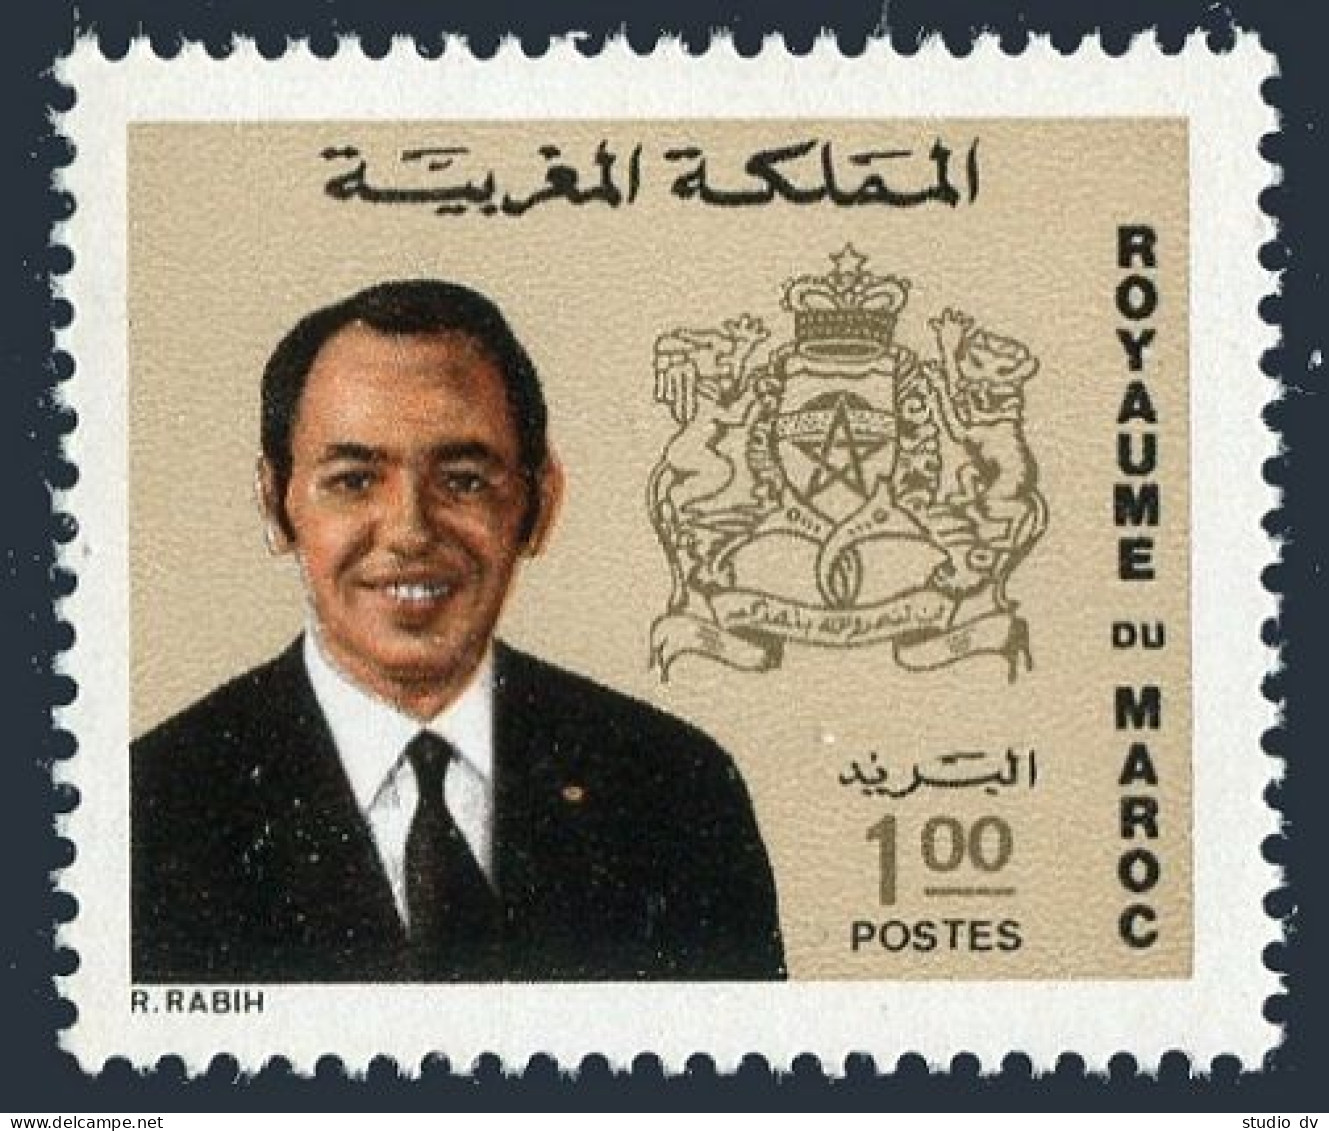 Morocco 291,MNH.Michel 737. King Hassan II,Coat Of Arms,1973. - Marokko (1956-...)